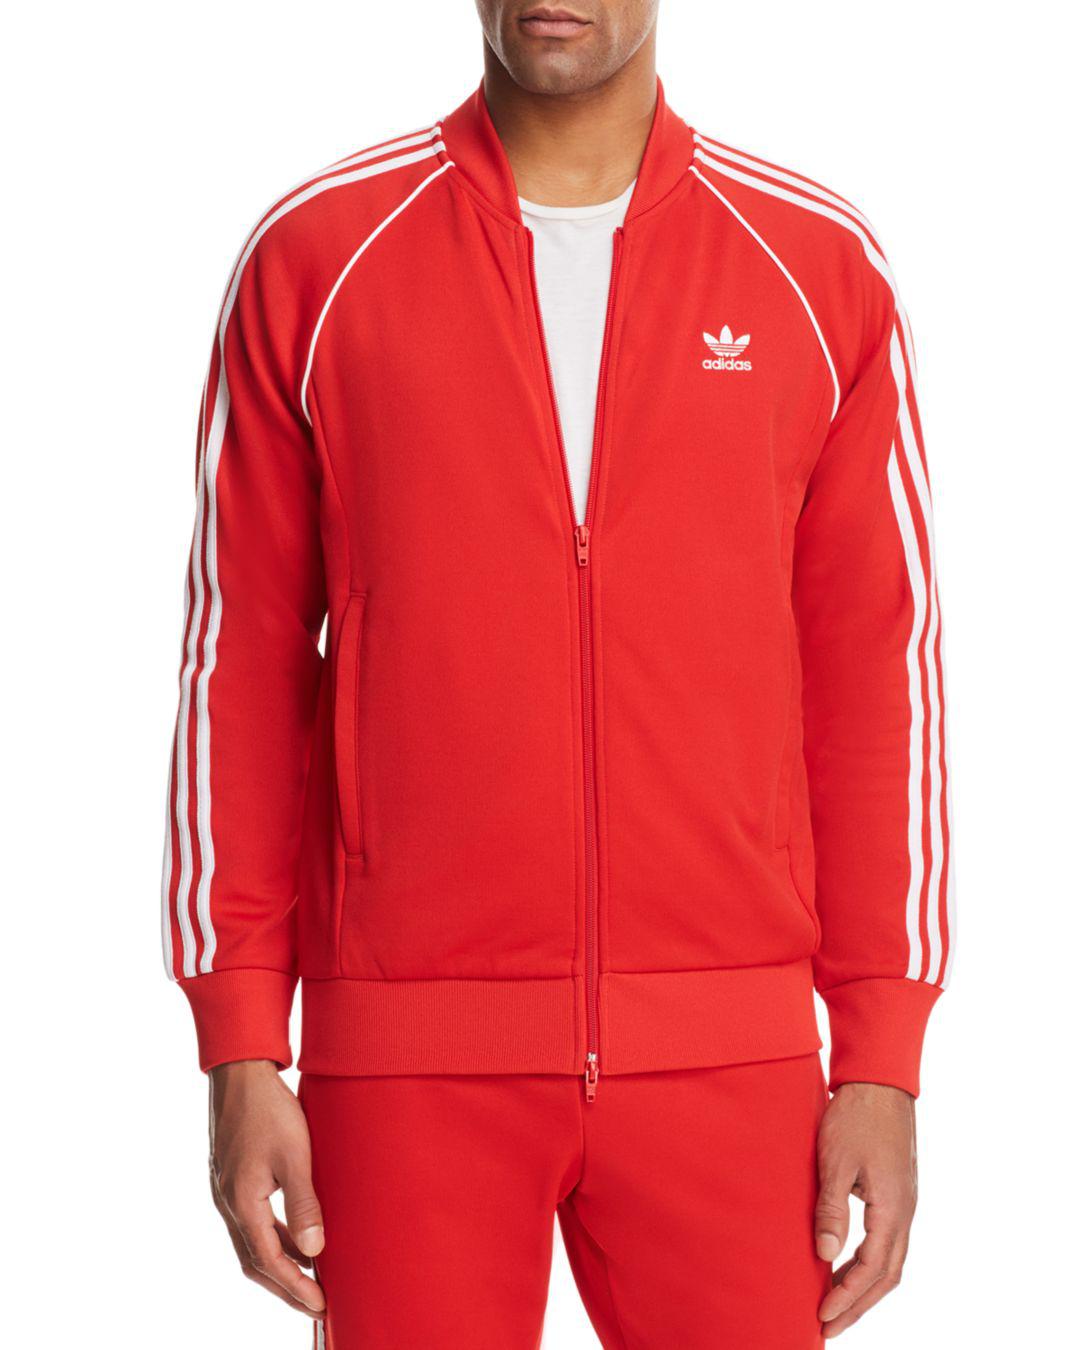 adidas superstar jacket red